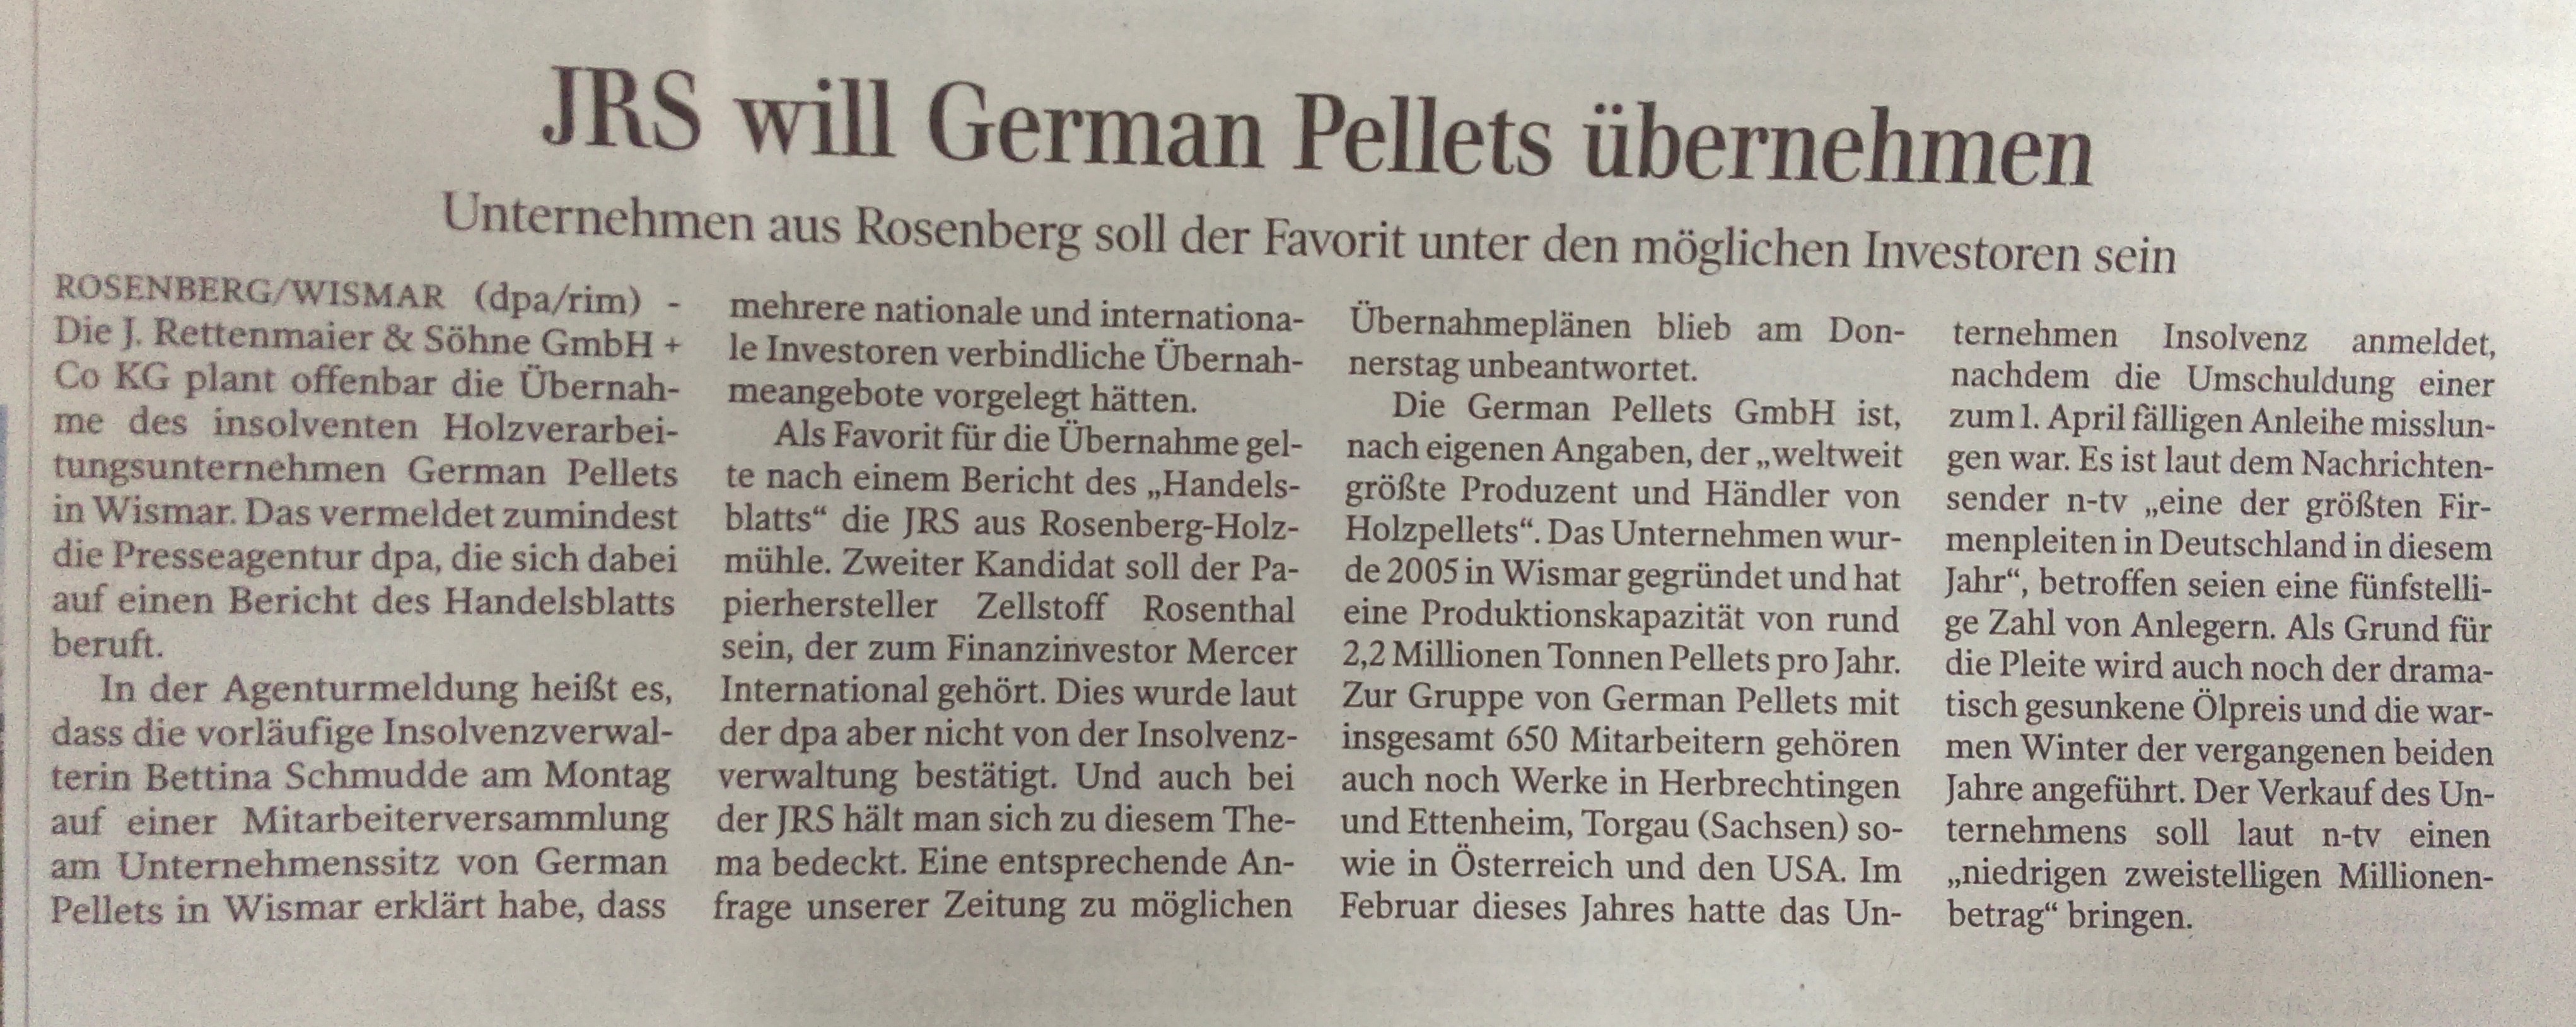 JRS - German Pellets